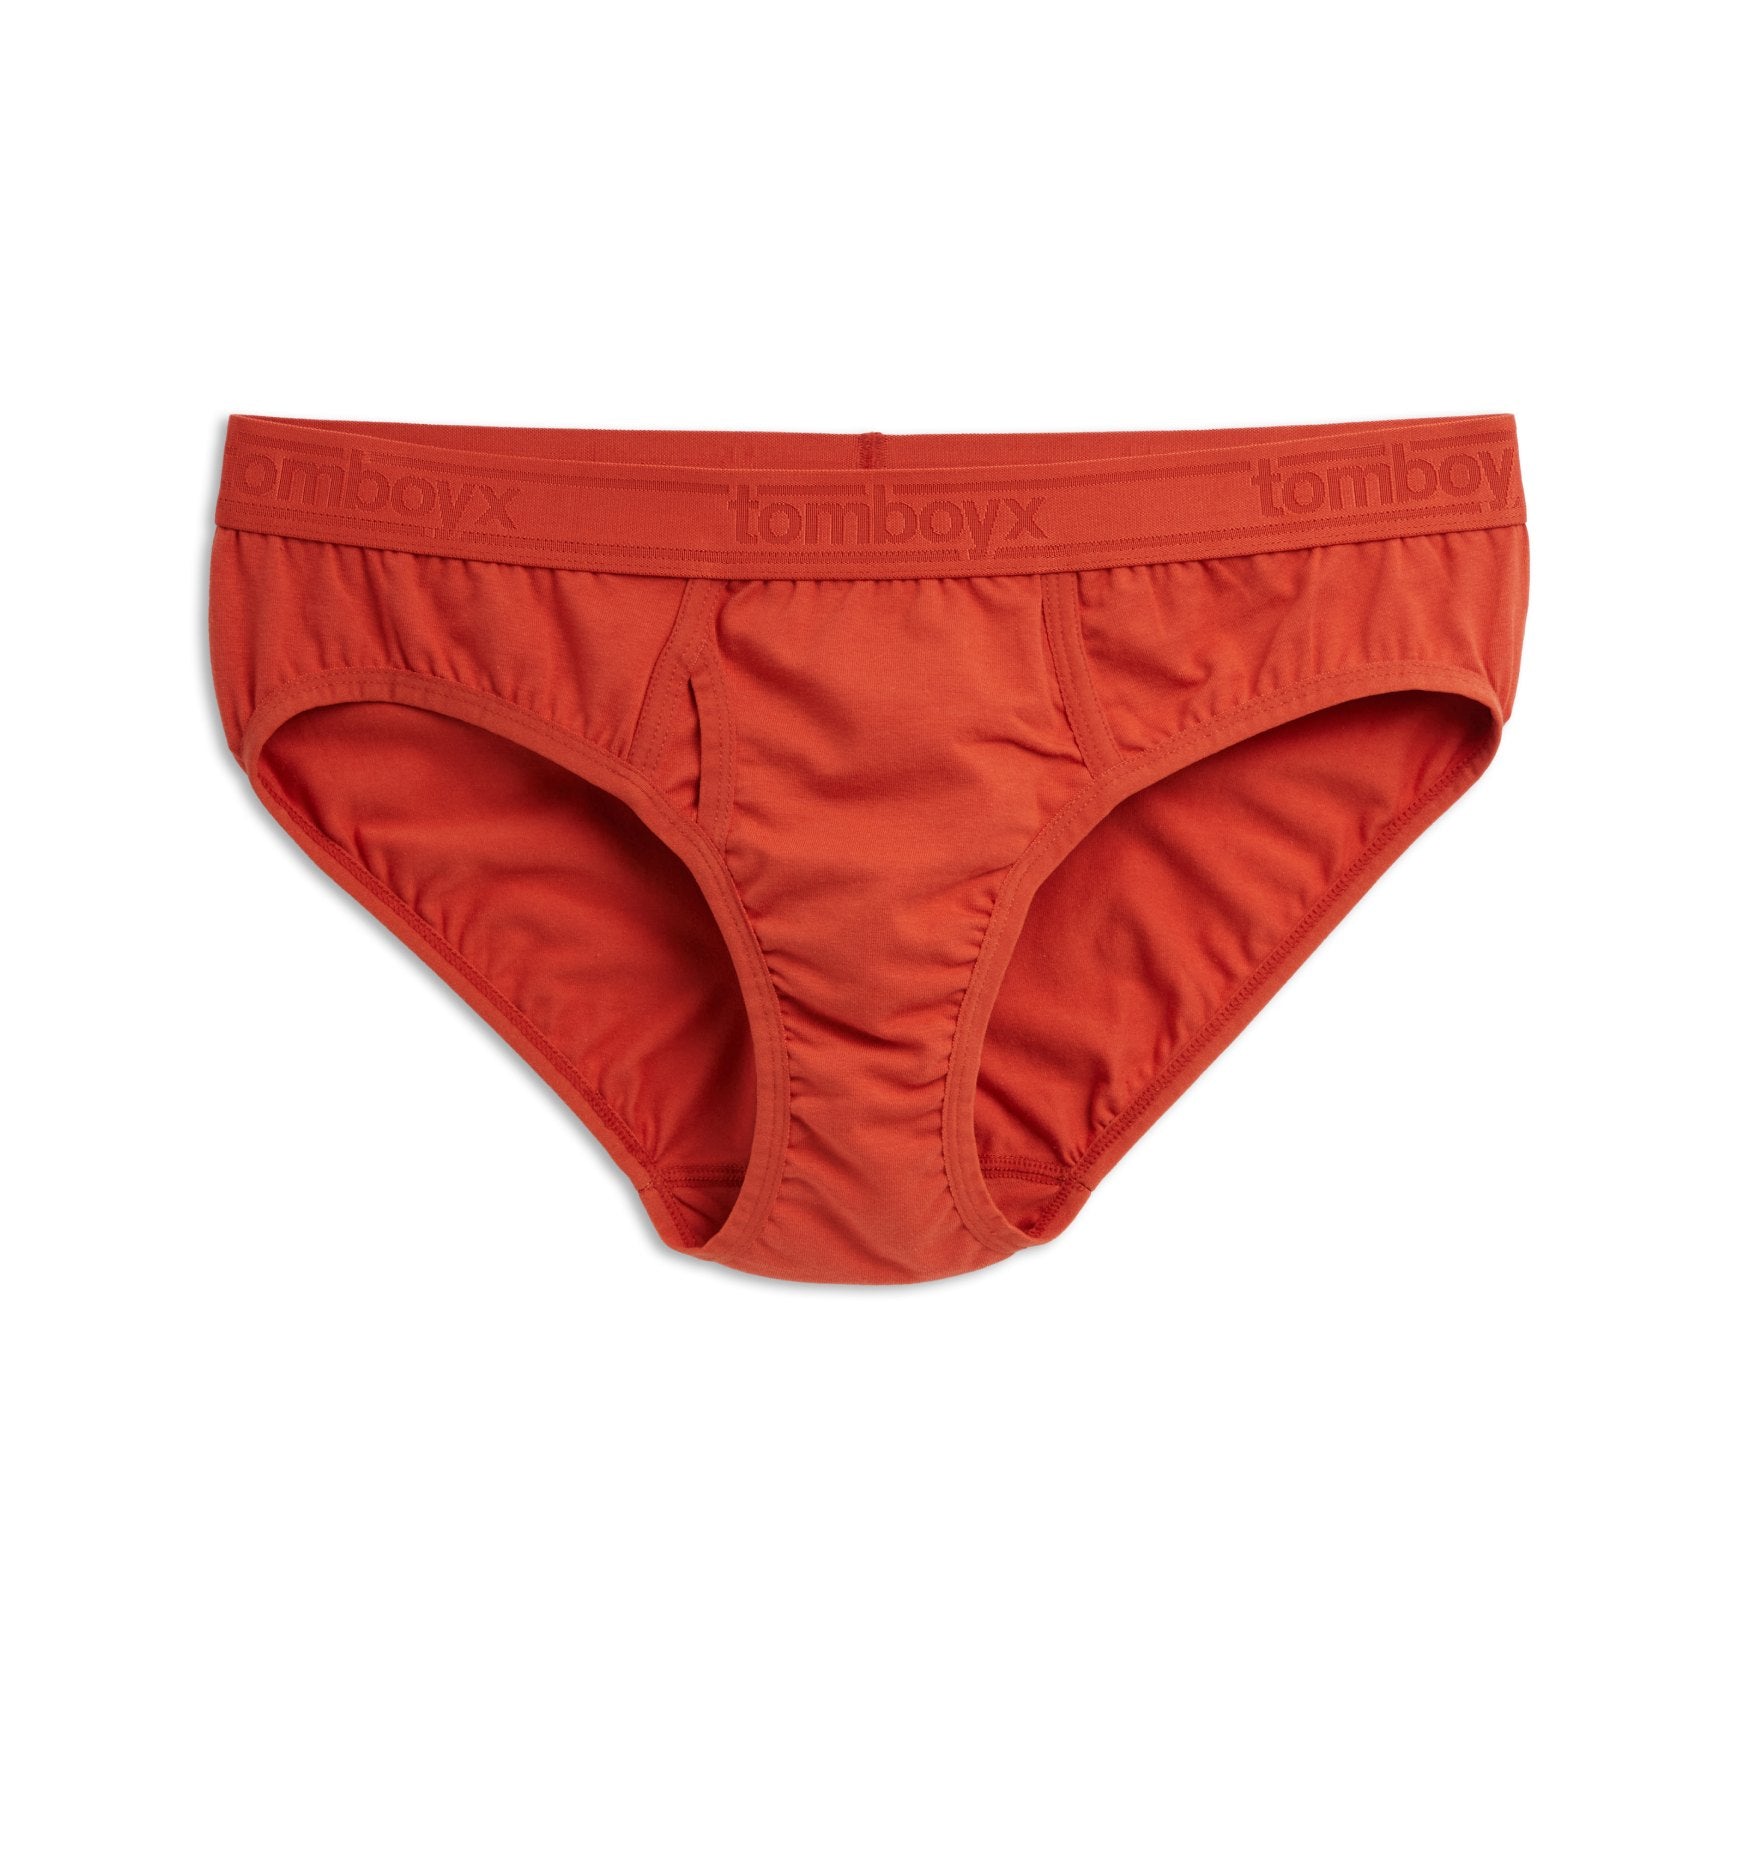  Men's Underwear - Kathmandu / Men's Underwear